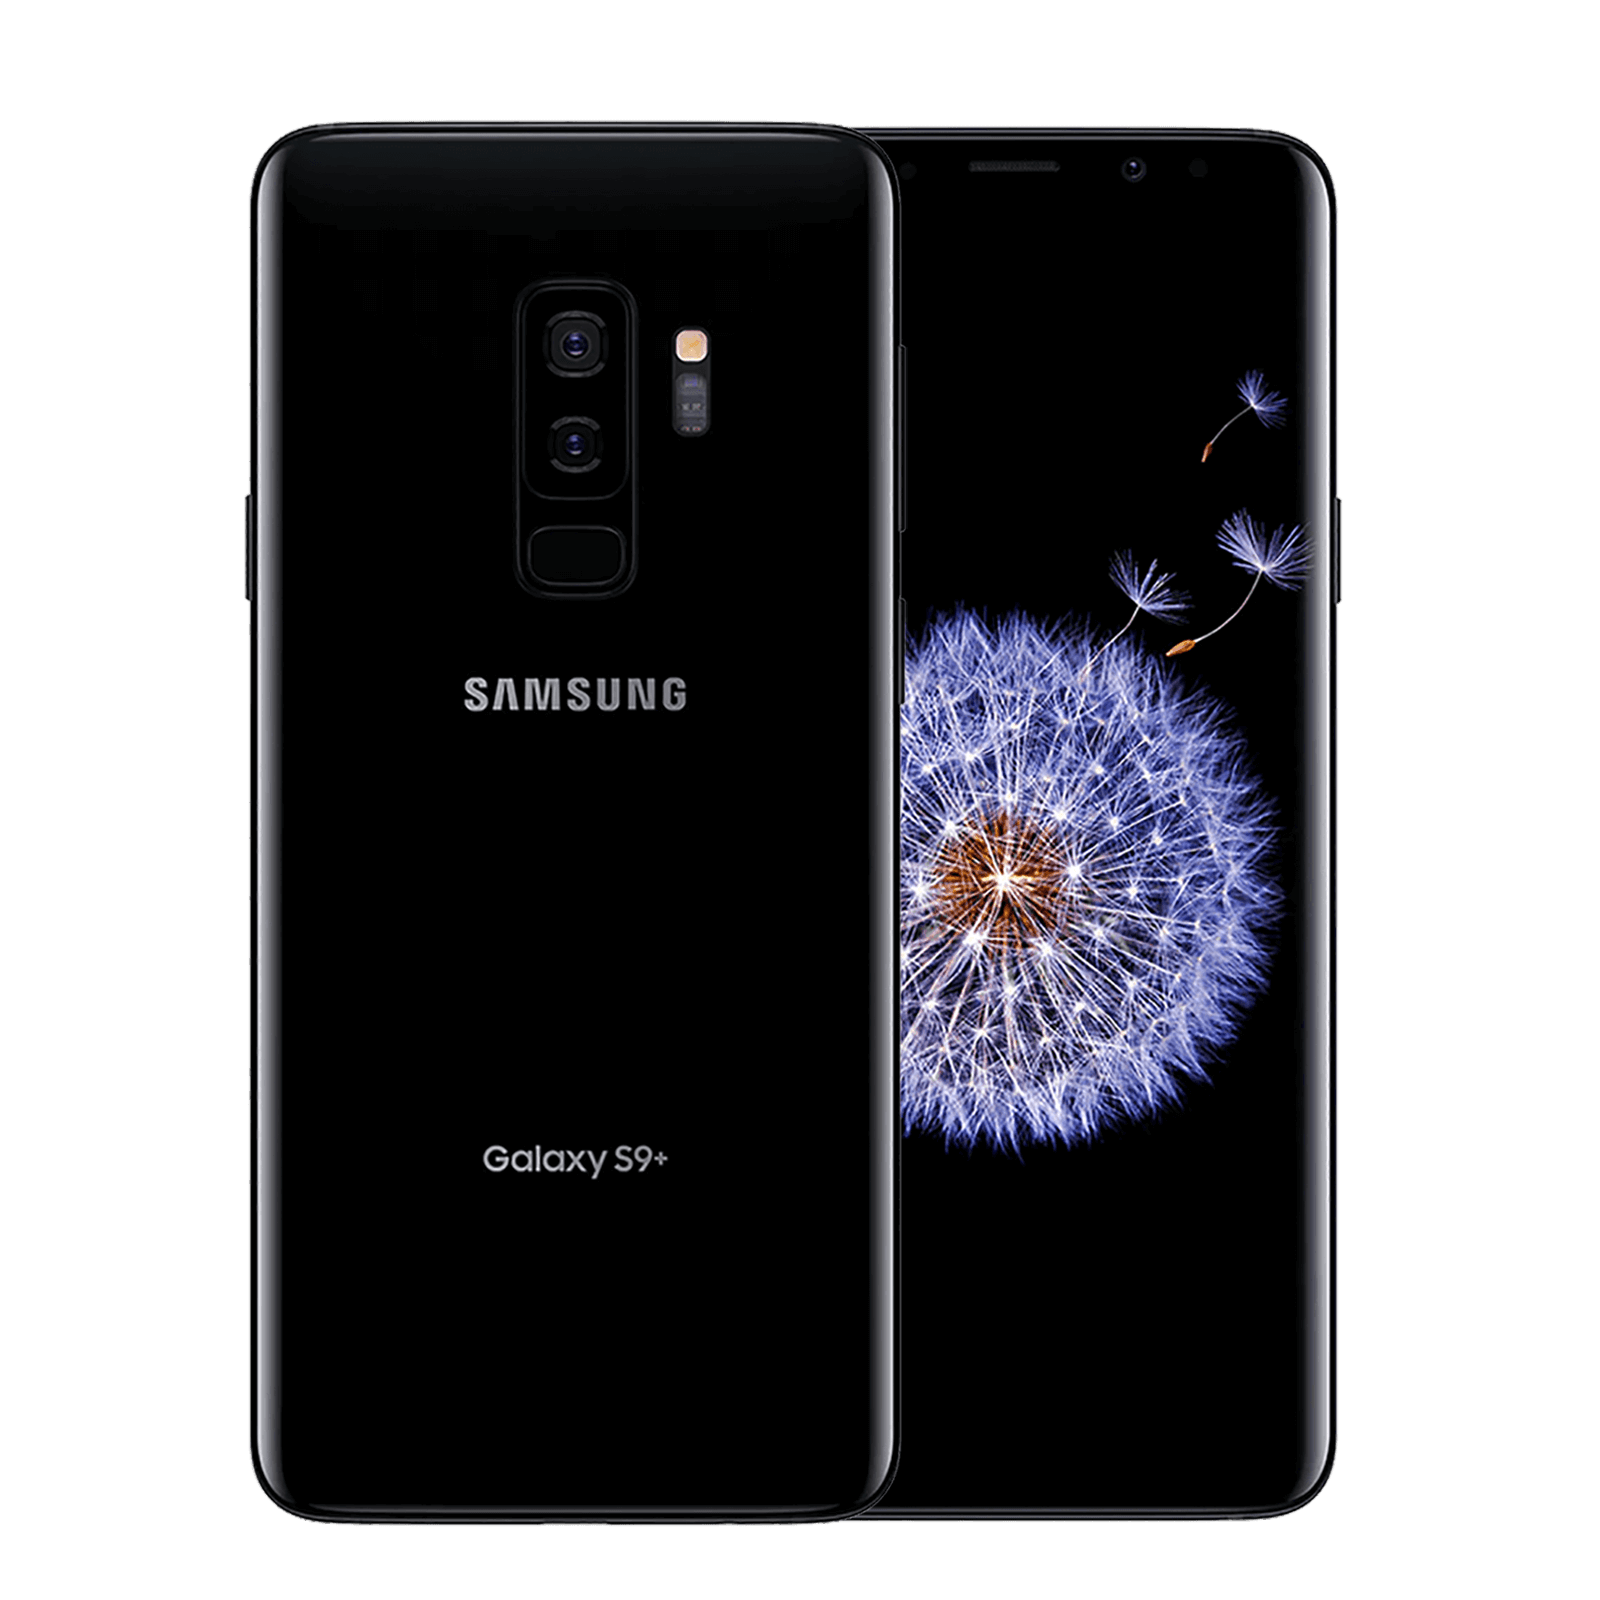 Samsung Galaxy S9 Plus 64GB Black Very good - Unlocked